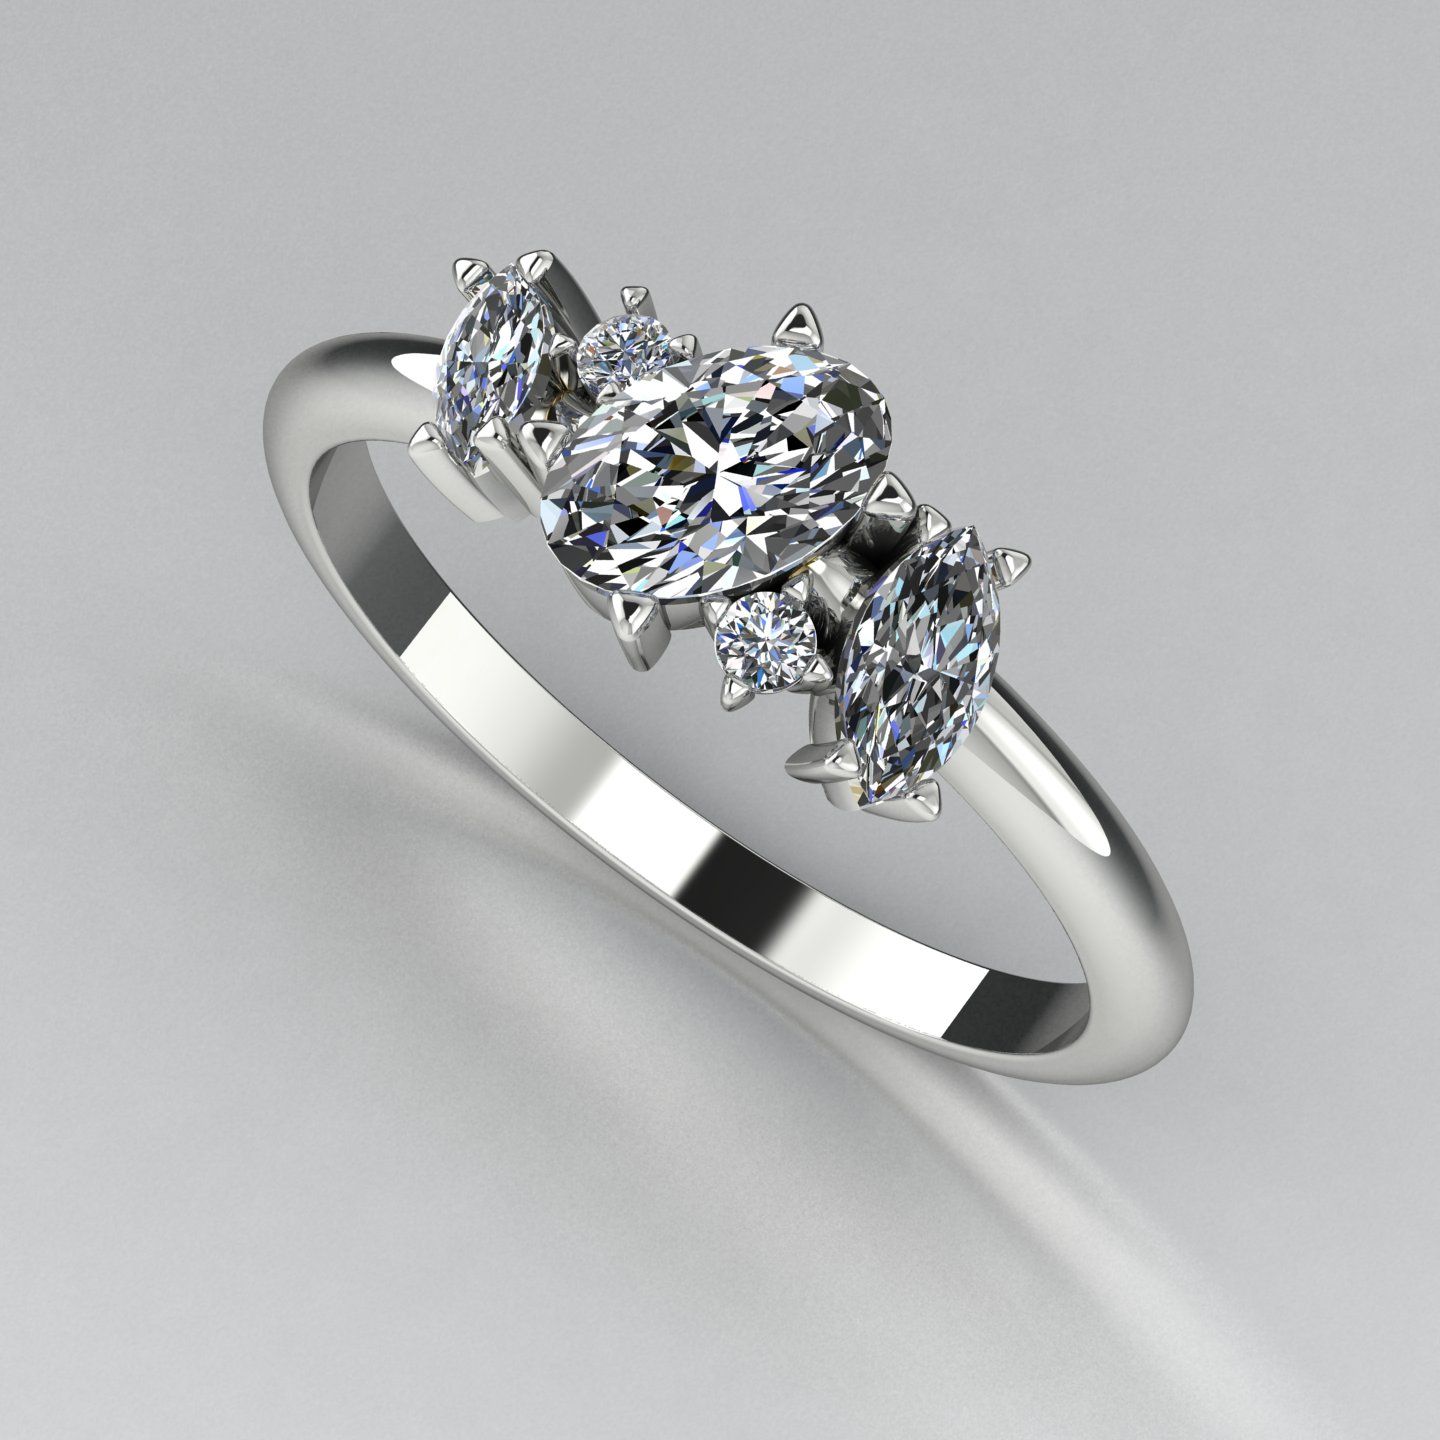 The Atlantis Diamond Engagement Ring